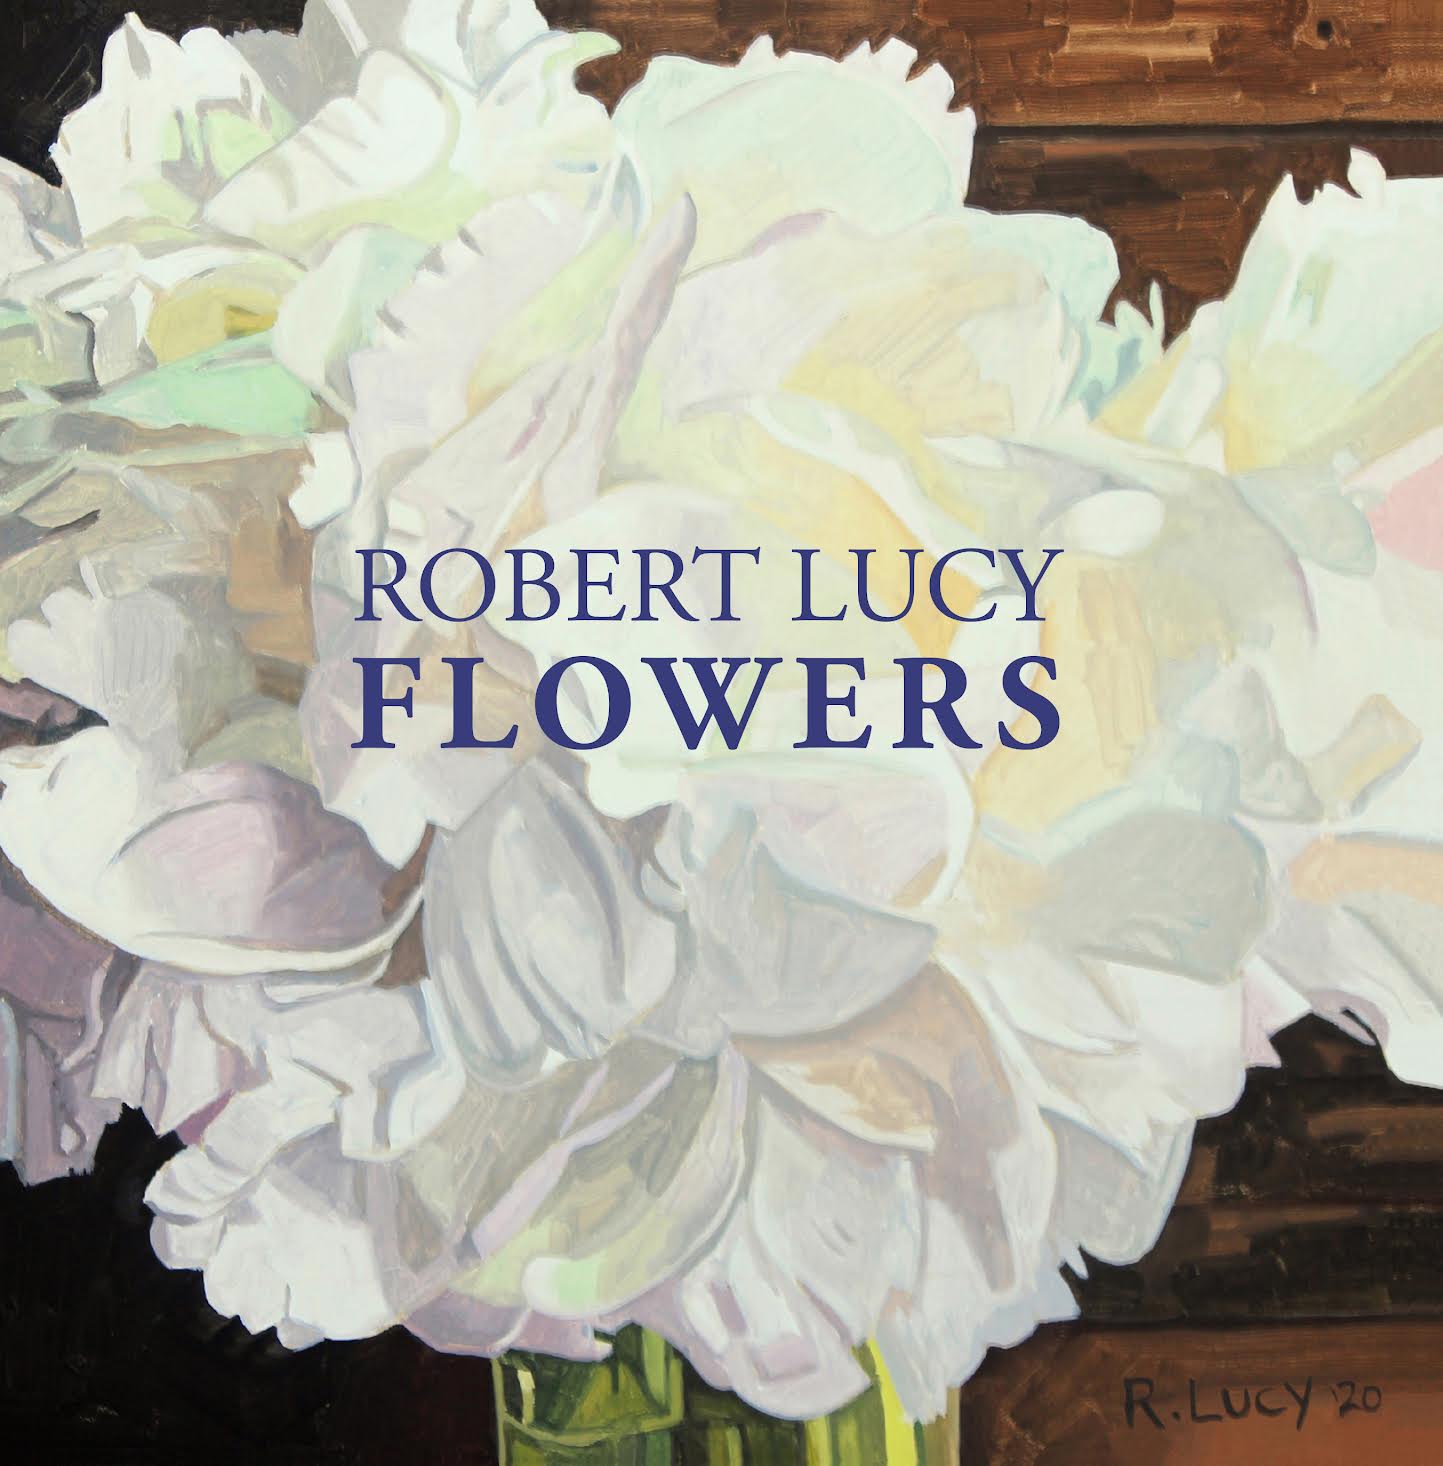 Robert Lucy Flowers